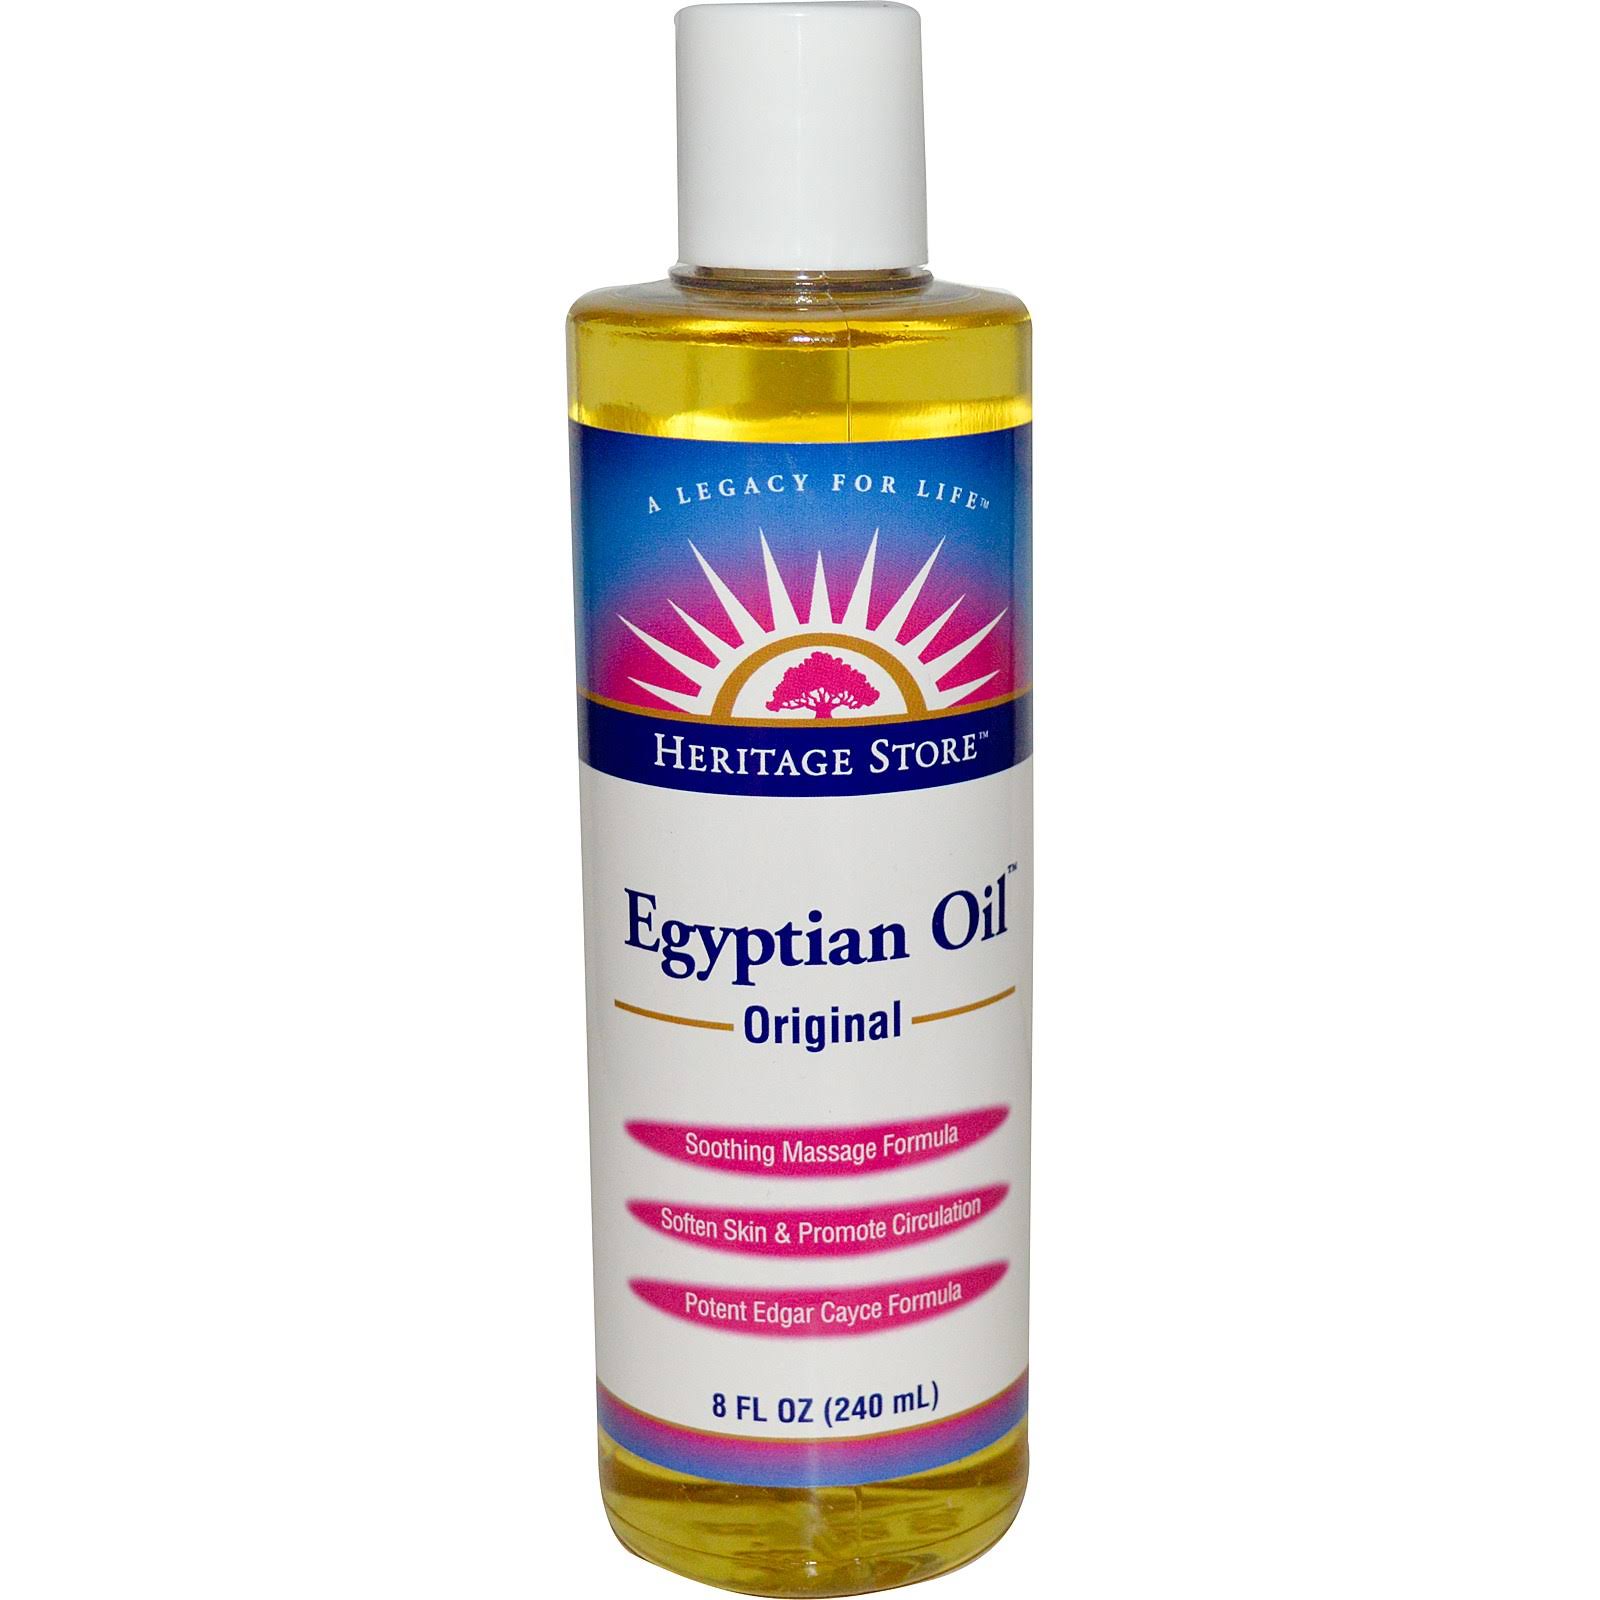 Heritage Products Massage Formula, Egyptian Oil, Original - 8 fl oz